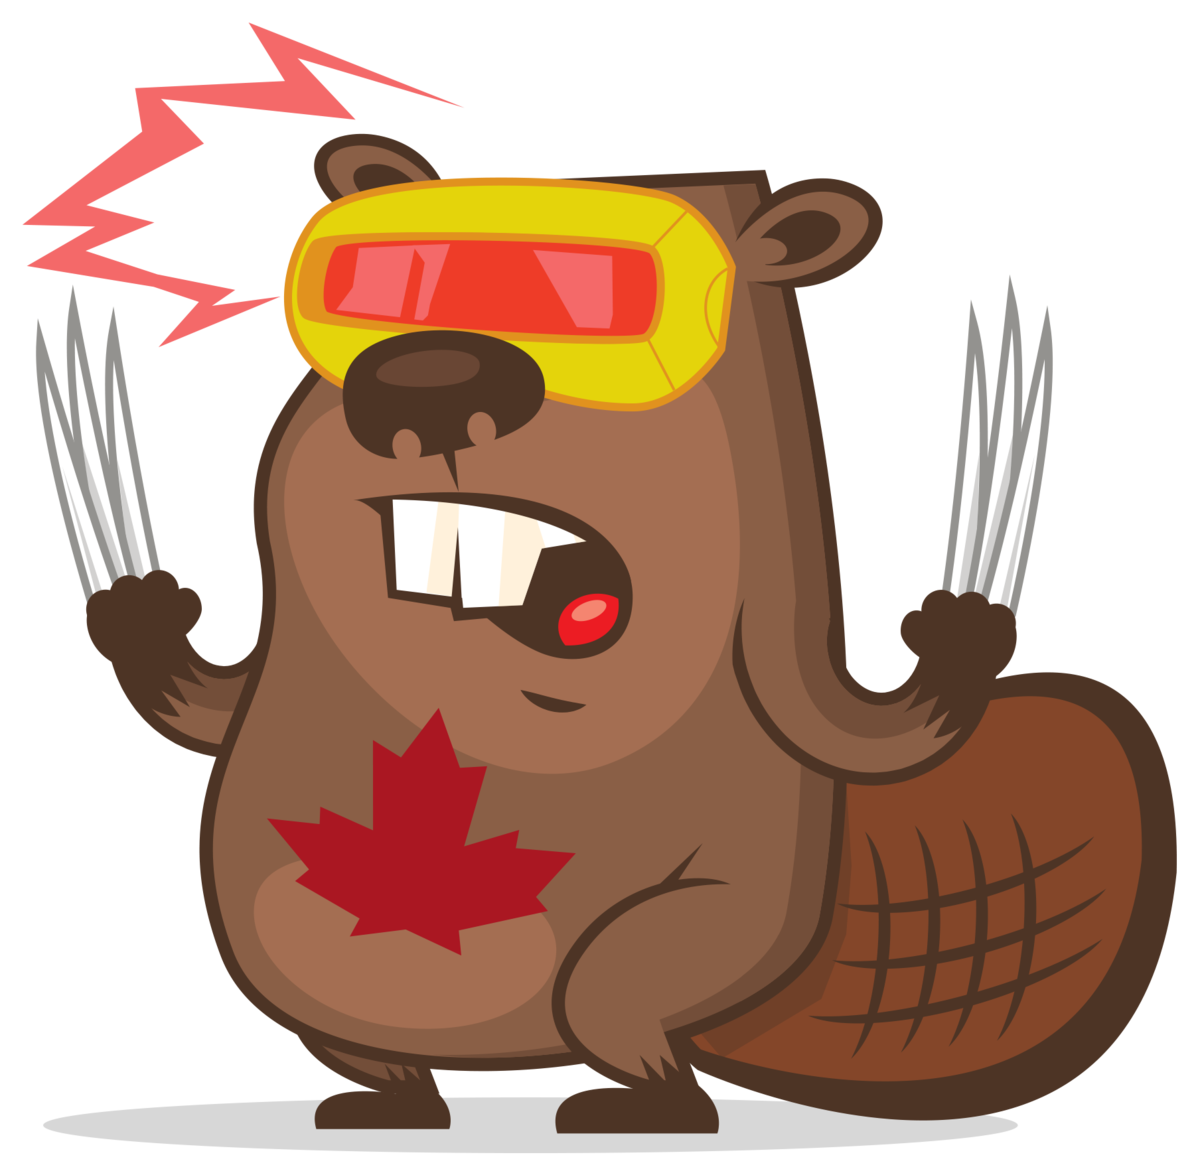 groundhog clipart beaver